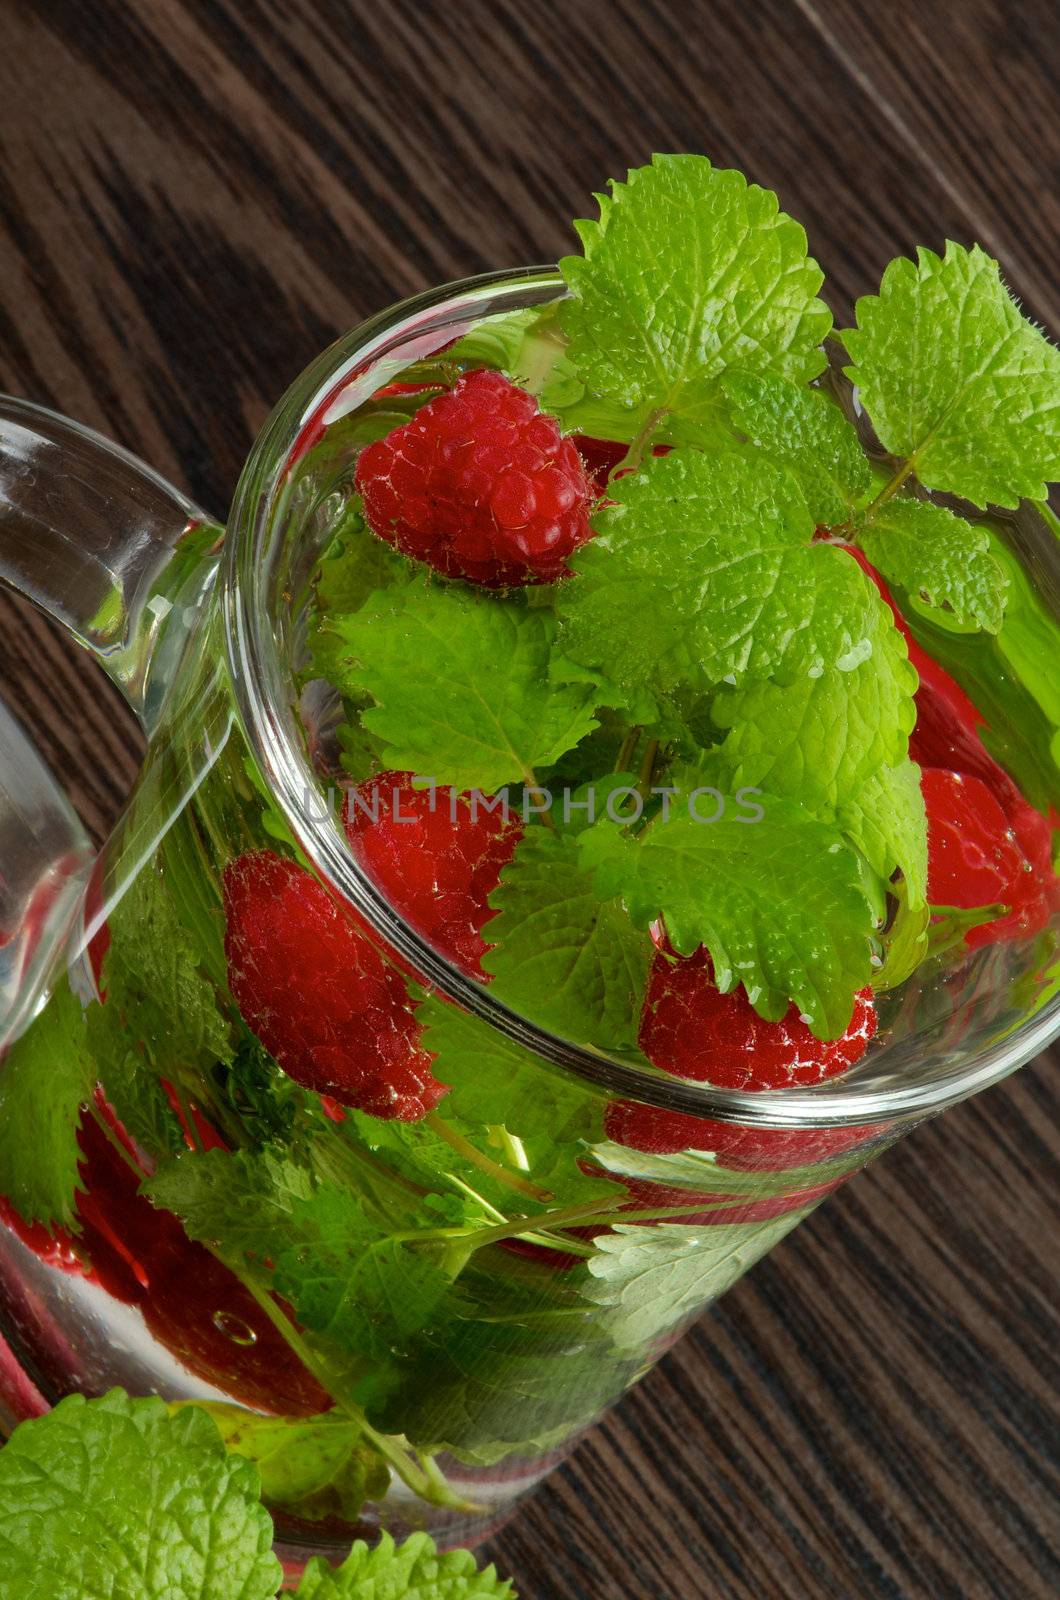 Raspberry Beverage by zhekos